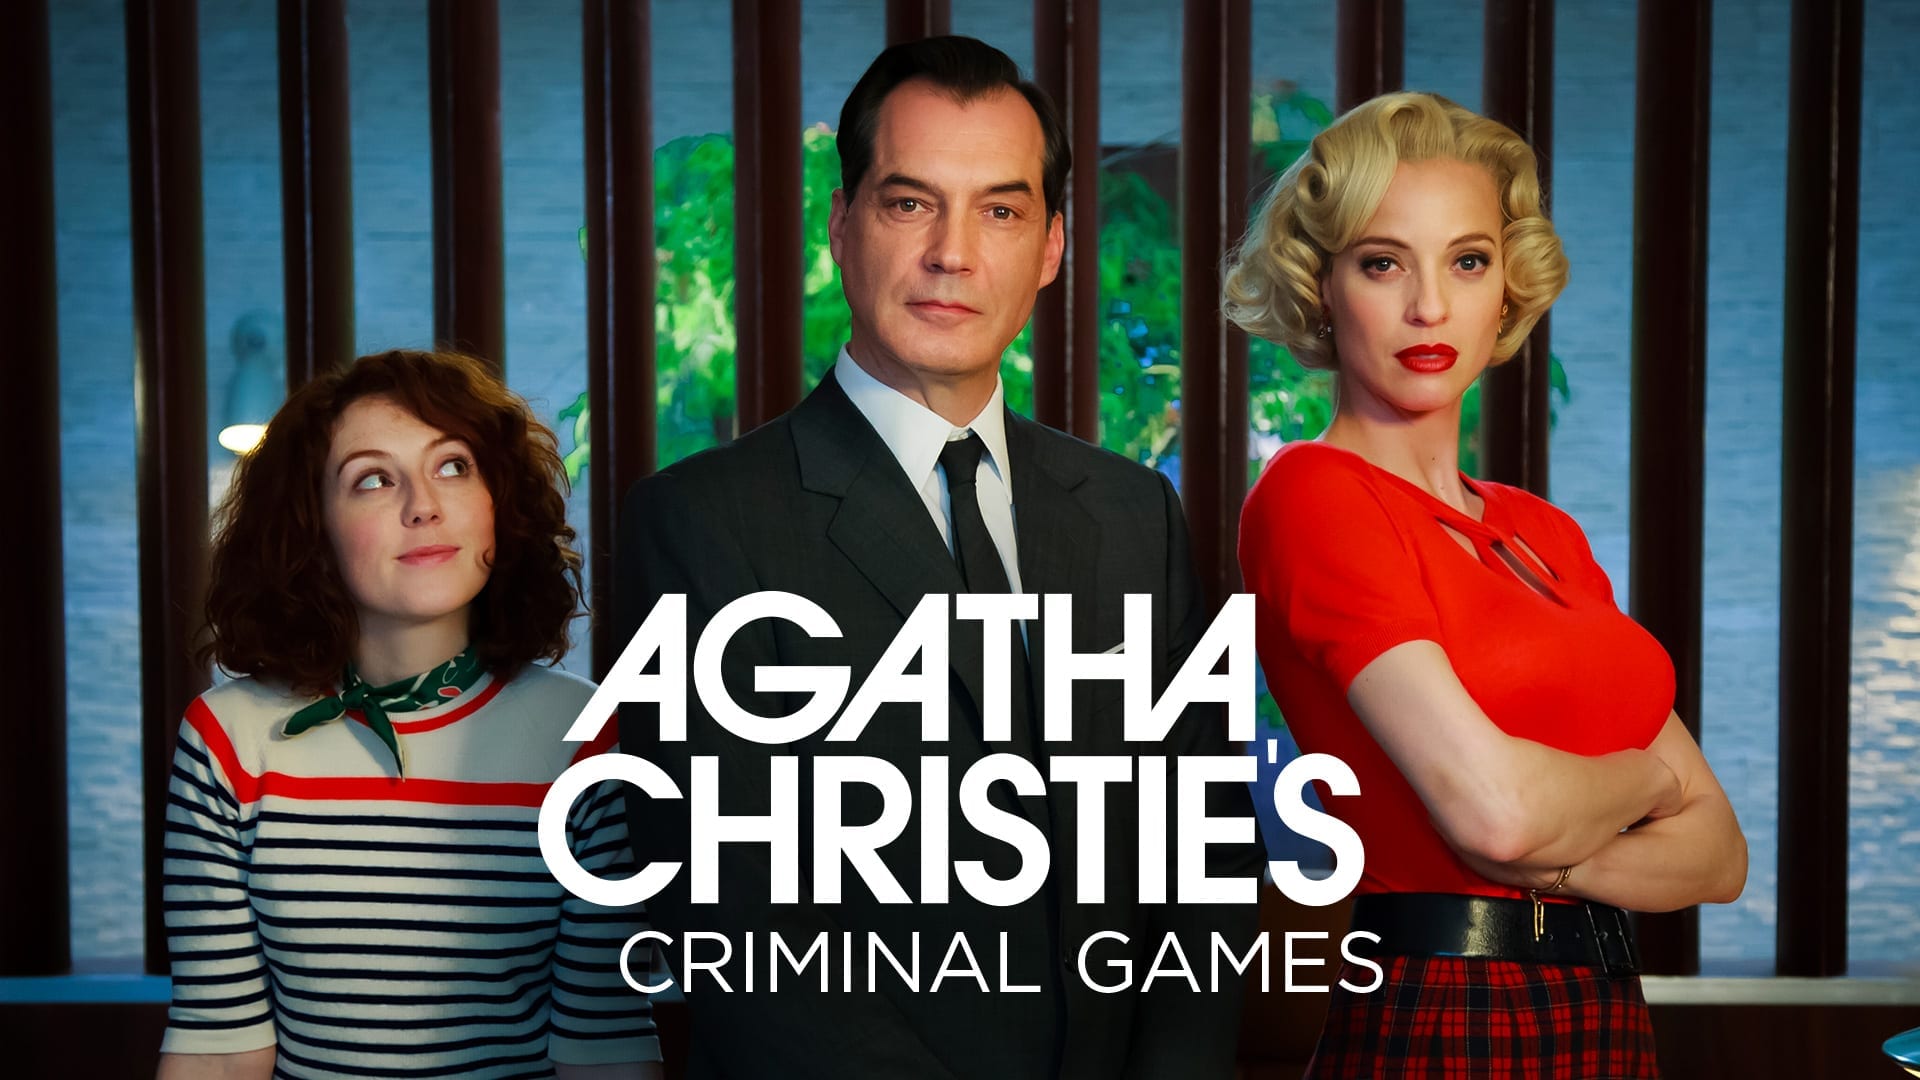 agatha christes criminal games vimeo ott series banner 1920x1080 1